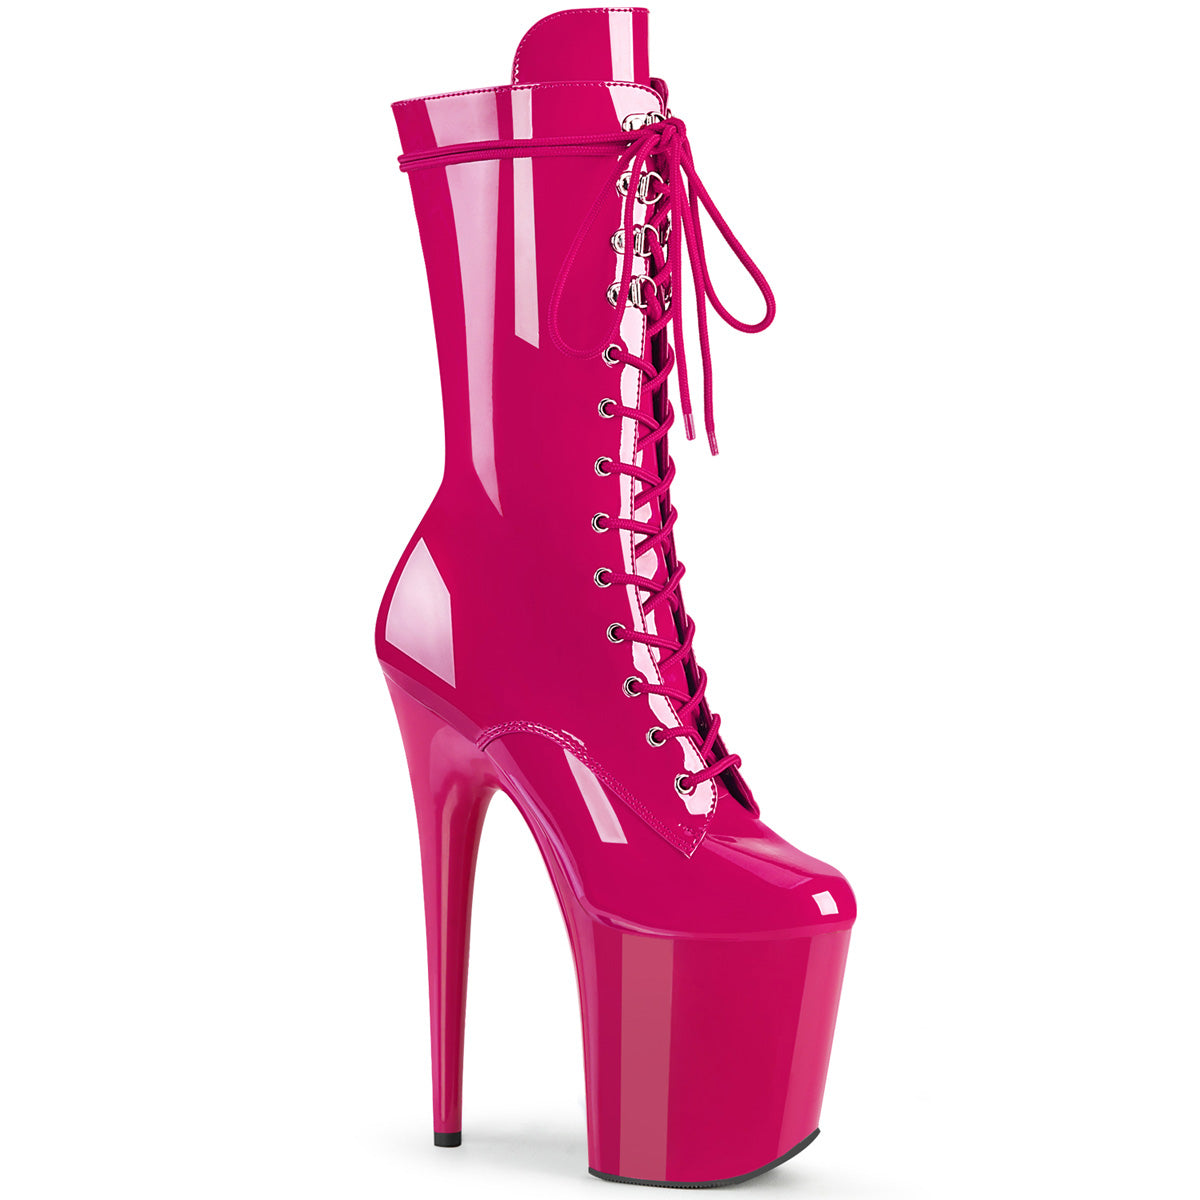 FLAMINGO-1050 8 Heel Hot Pink Patent Stripper Platforms High Heels – Pole  Dancing Shoes - KLS Supplies Ltd